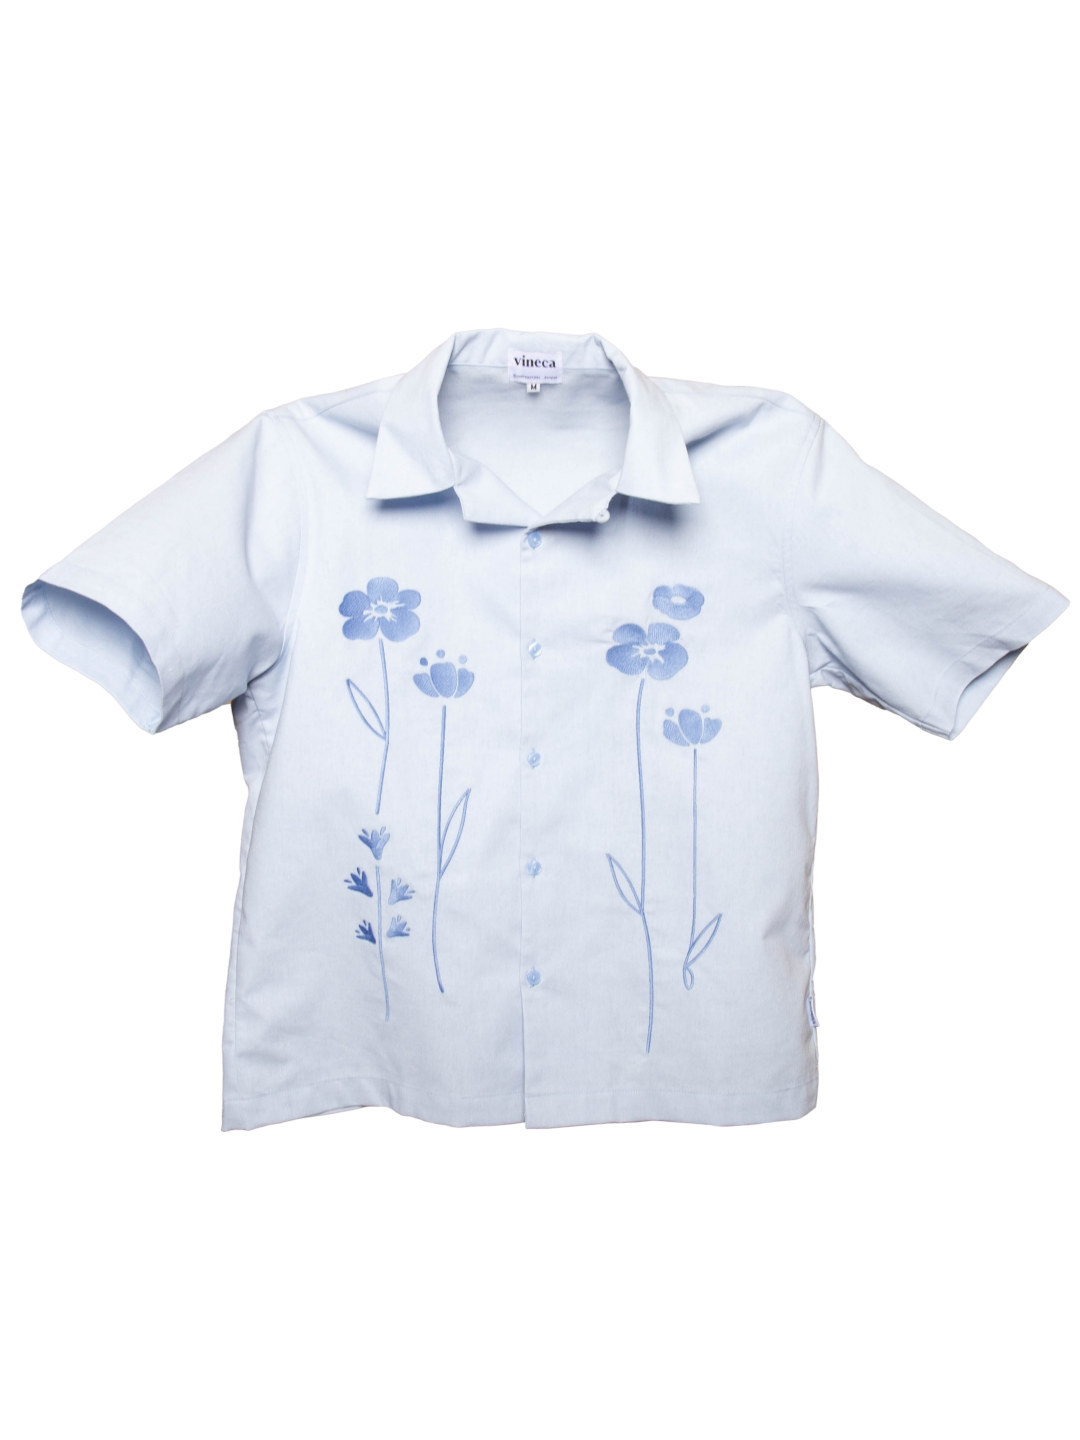 Vineca La Fleur Shirt (Blue)